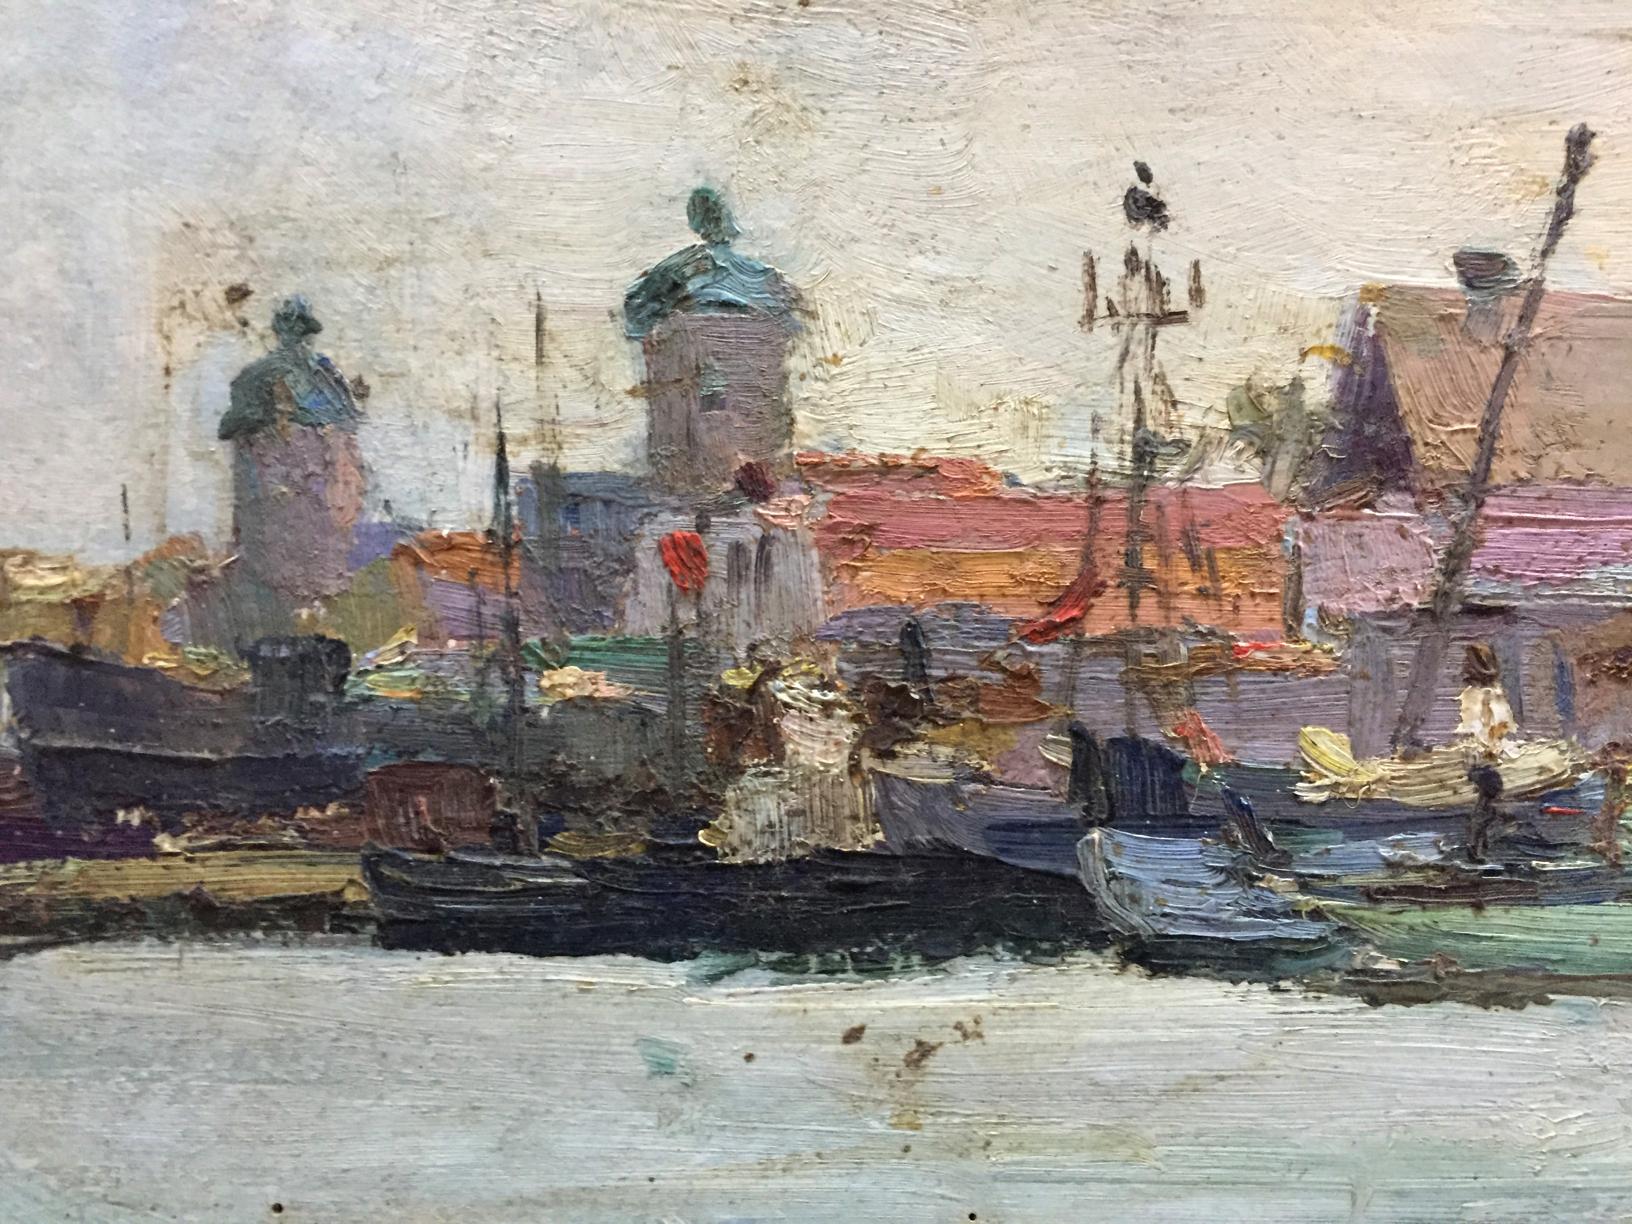 Stolyarenko's "Ship Port" oil painting, capturing bustling harbor activity.